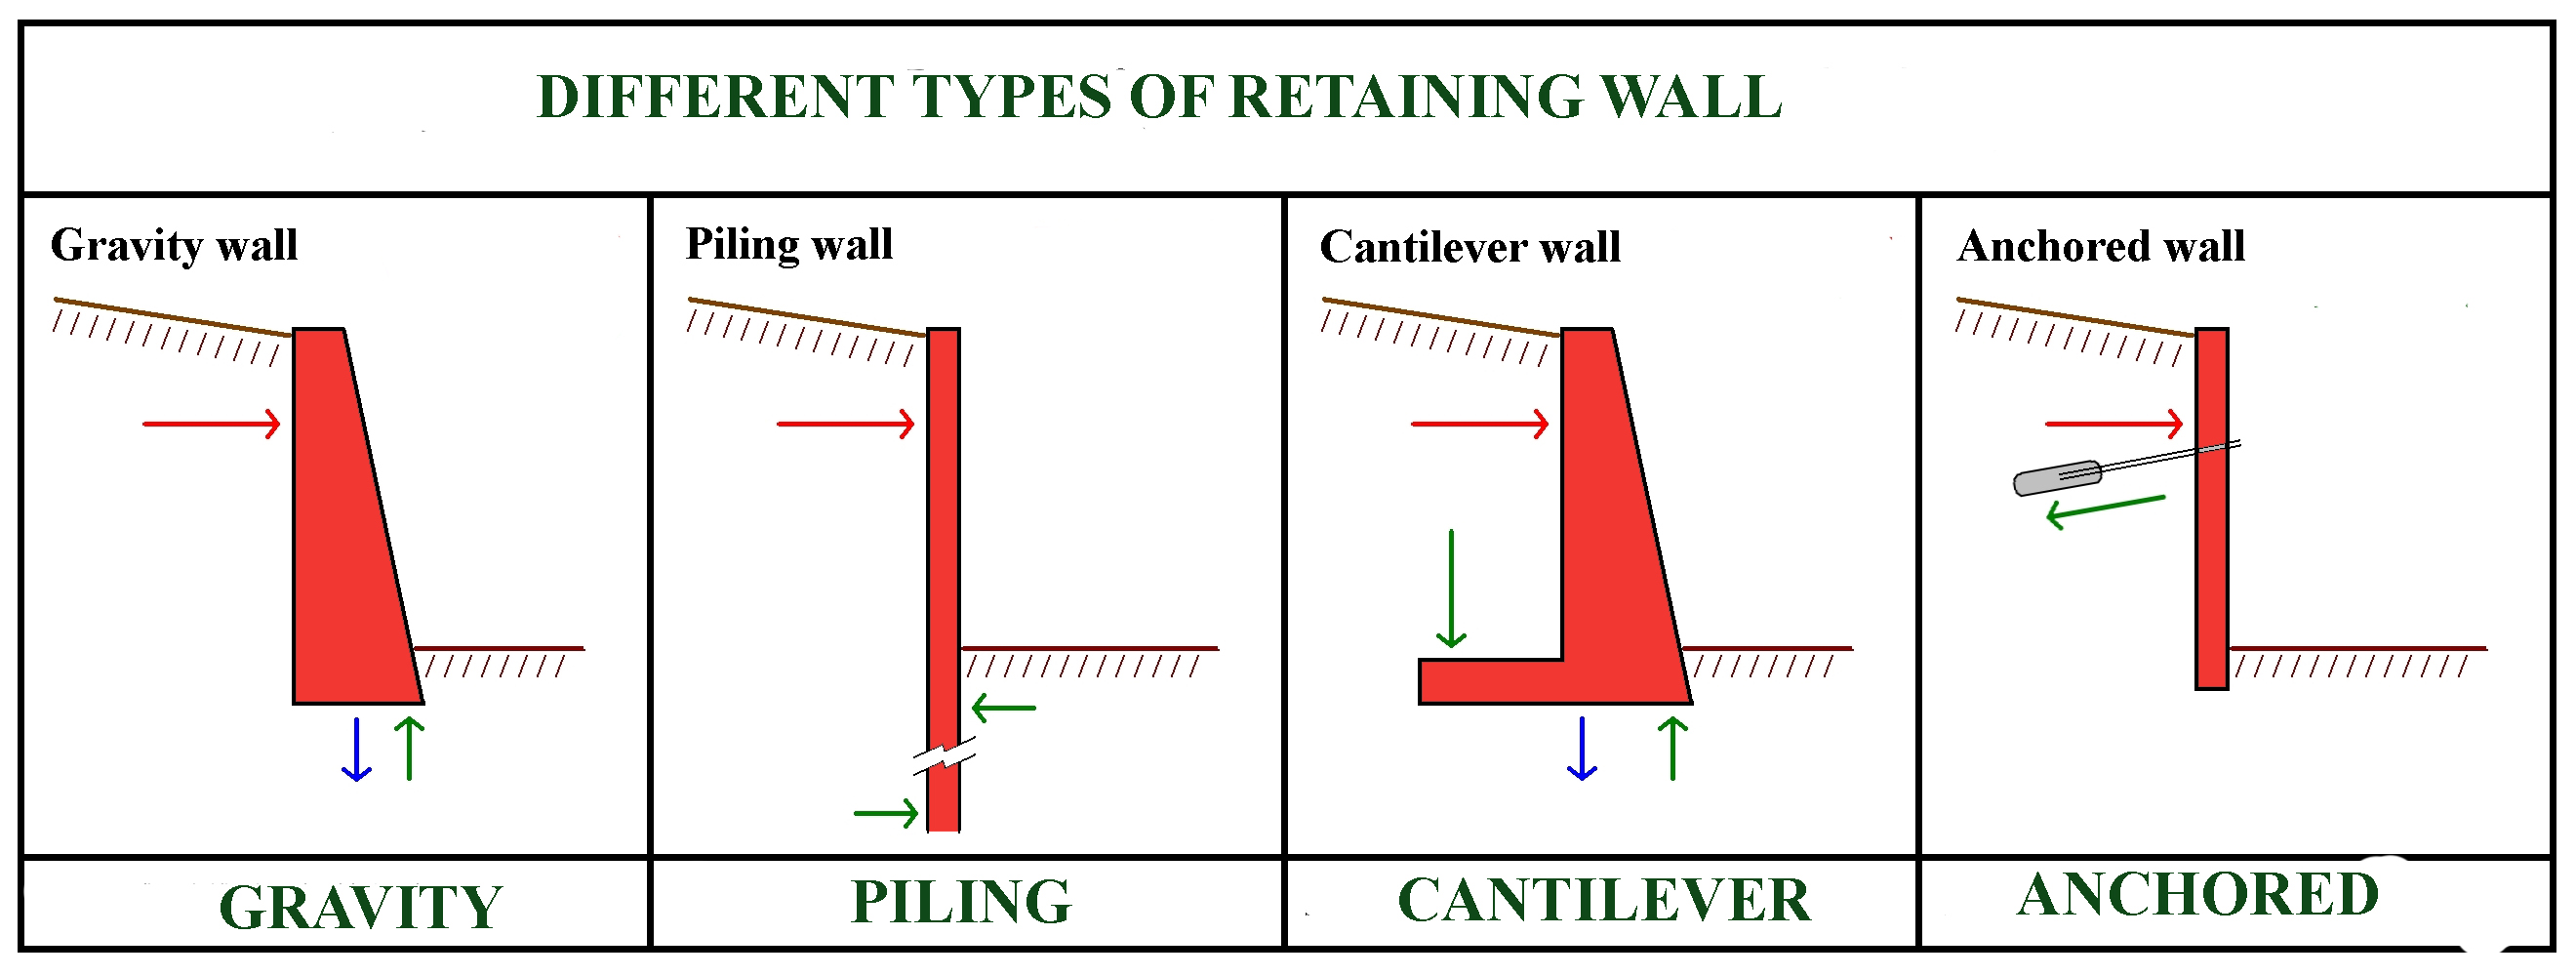 Gravity Retaining Wall